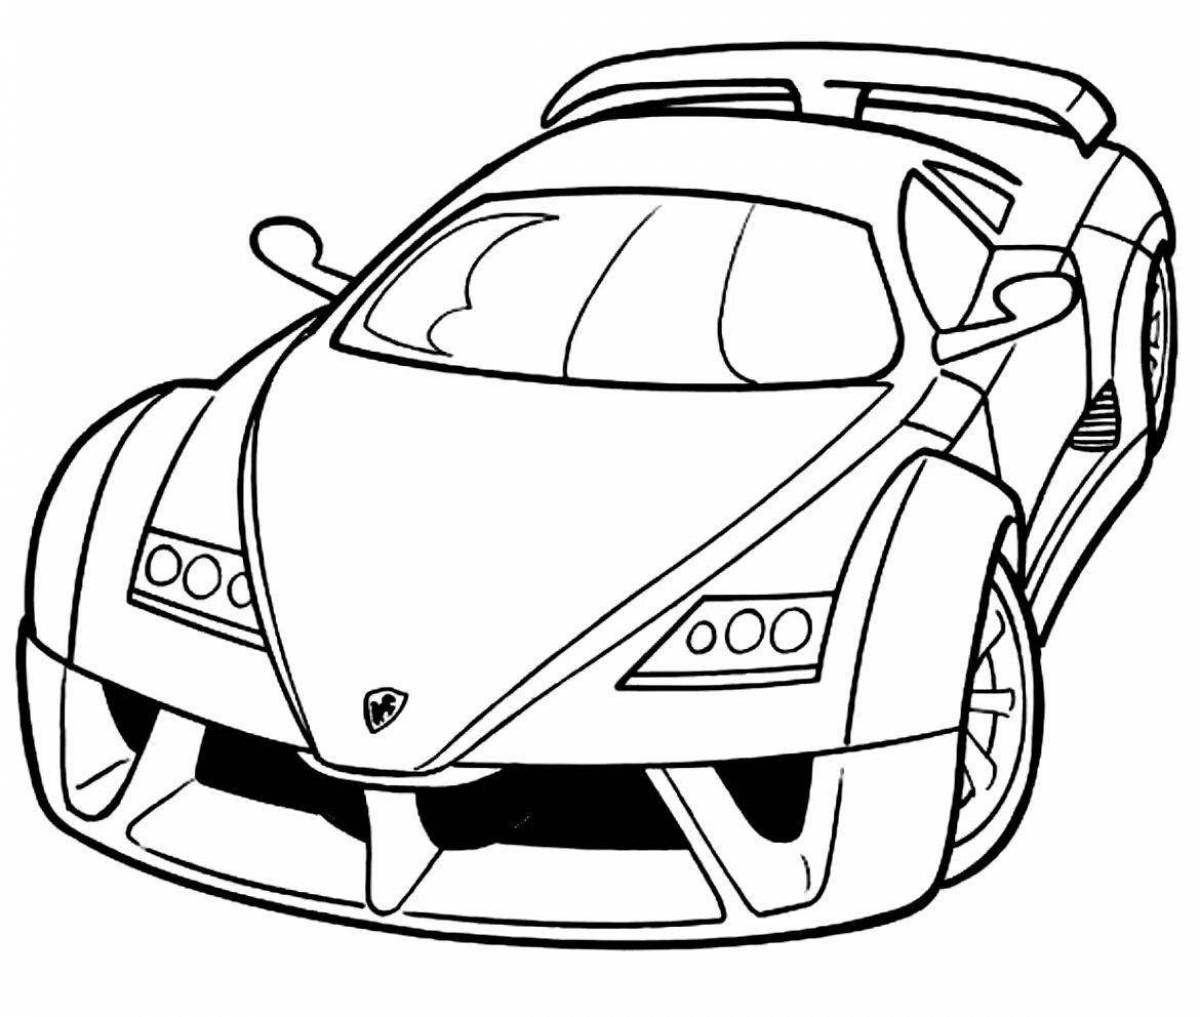 Ferrari playful car coloring page